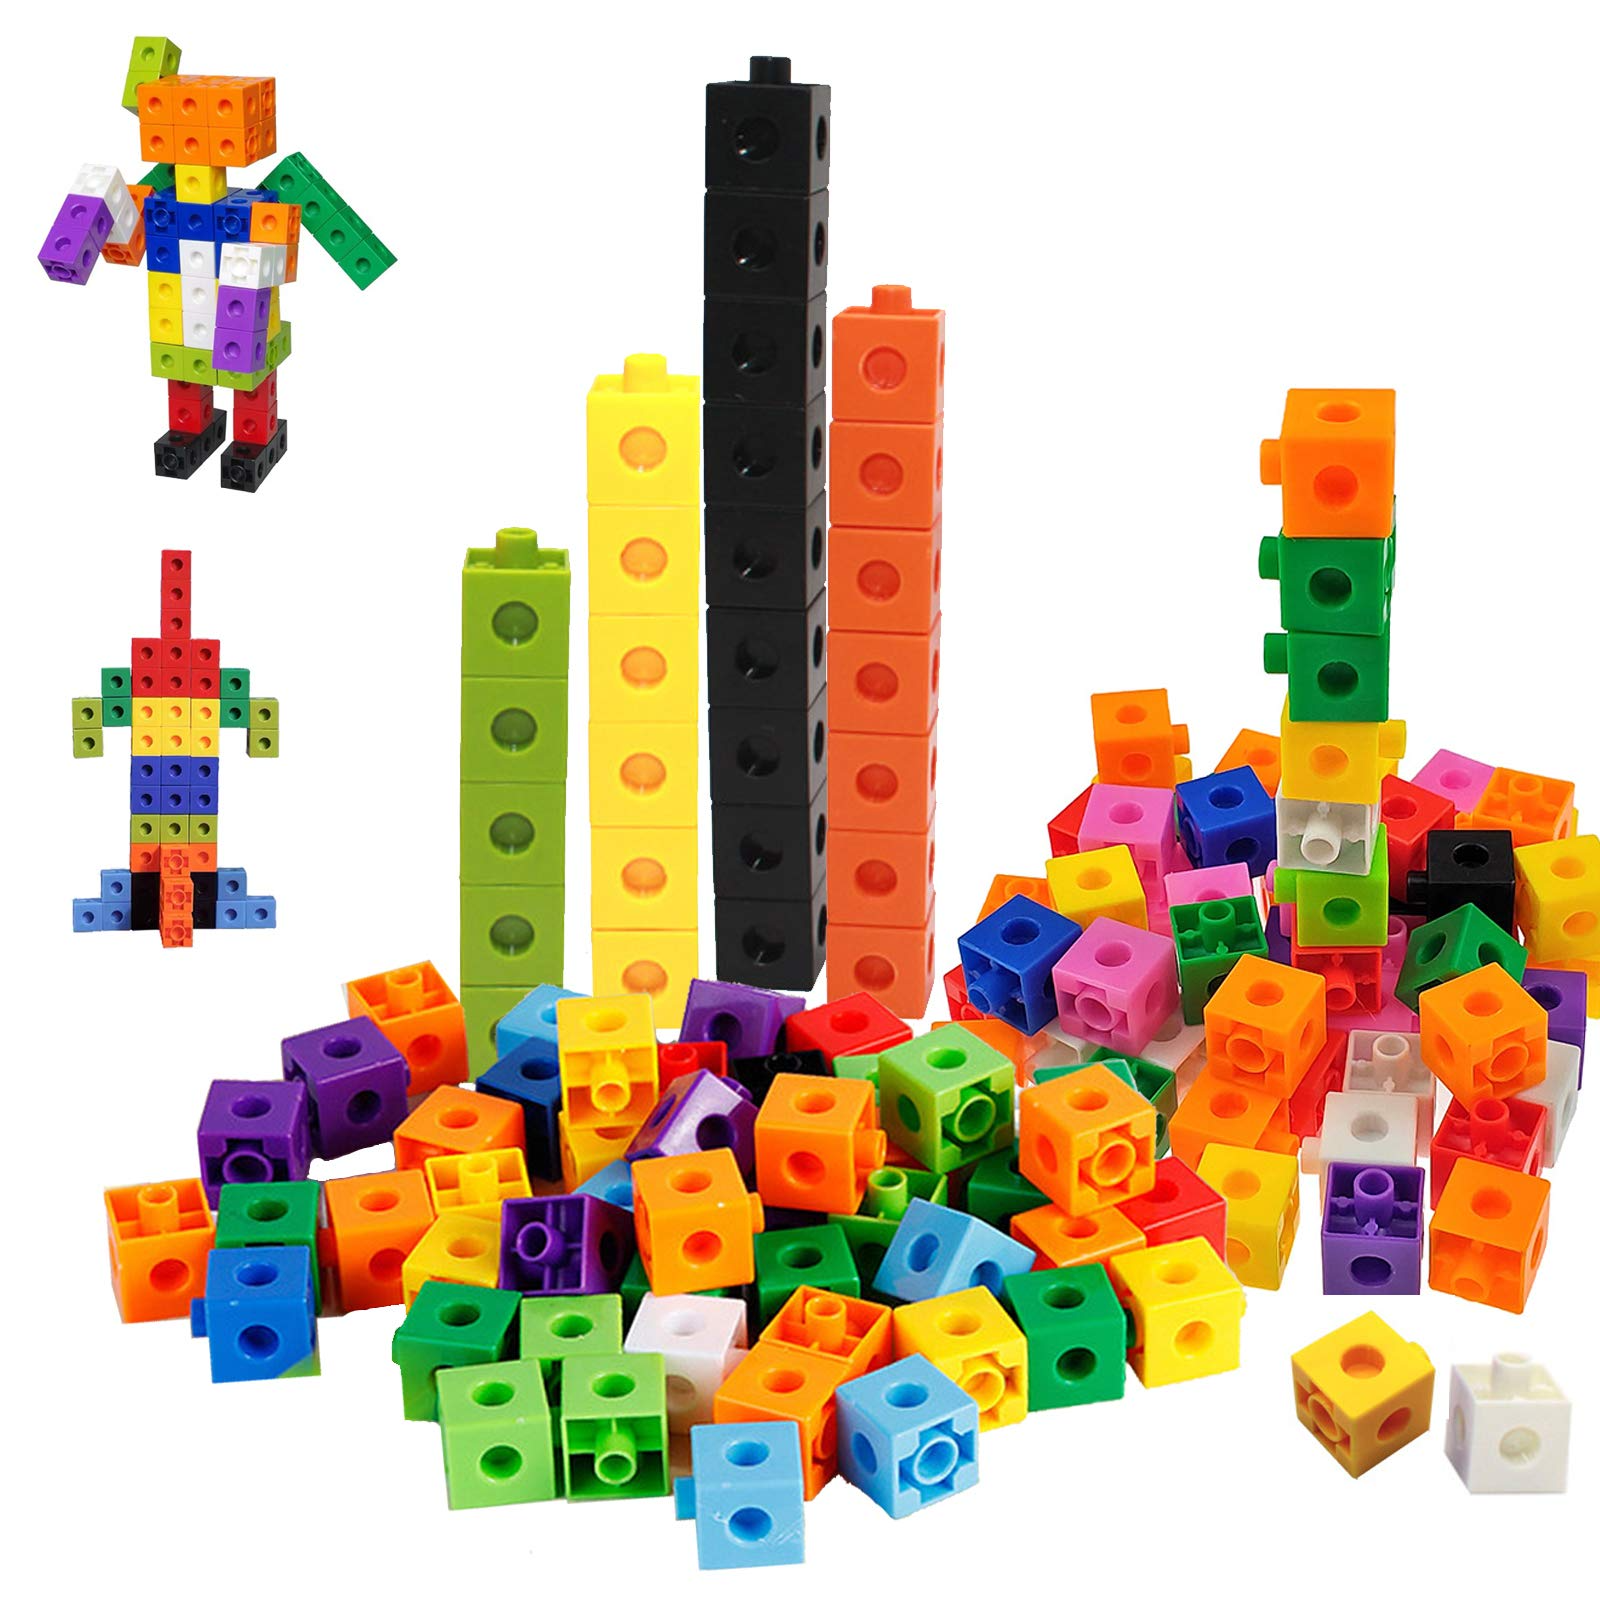 MathLink Cubes Early Math Starter Set, Educational Toy